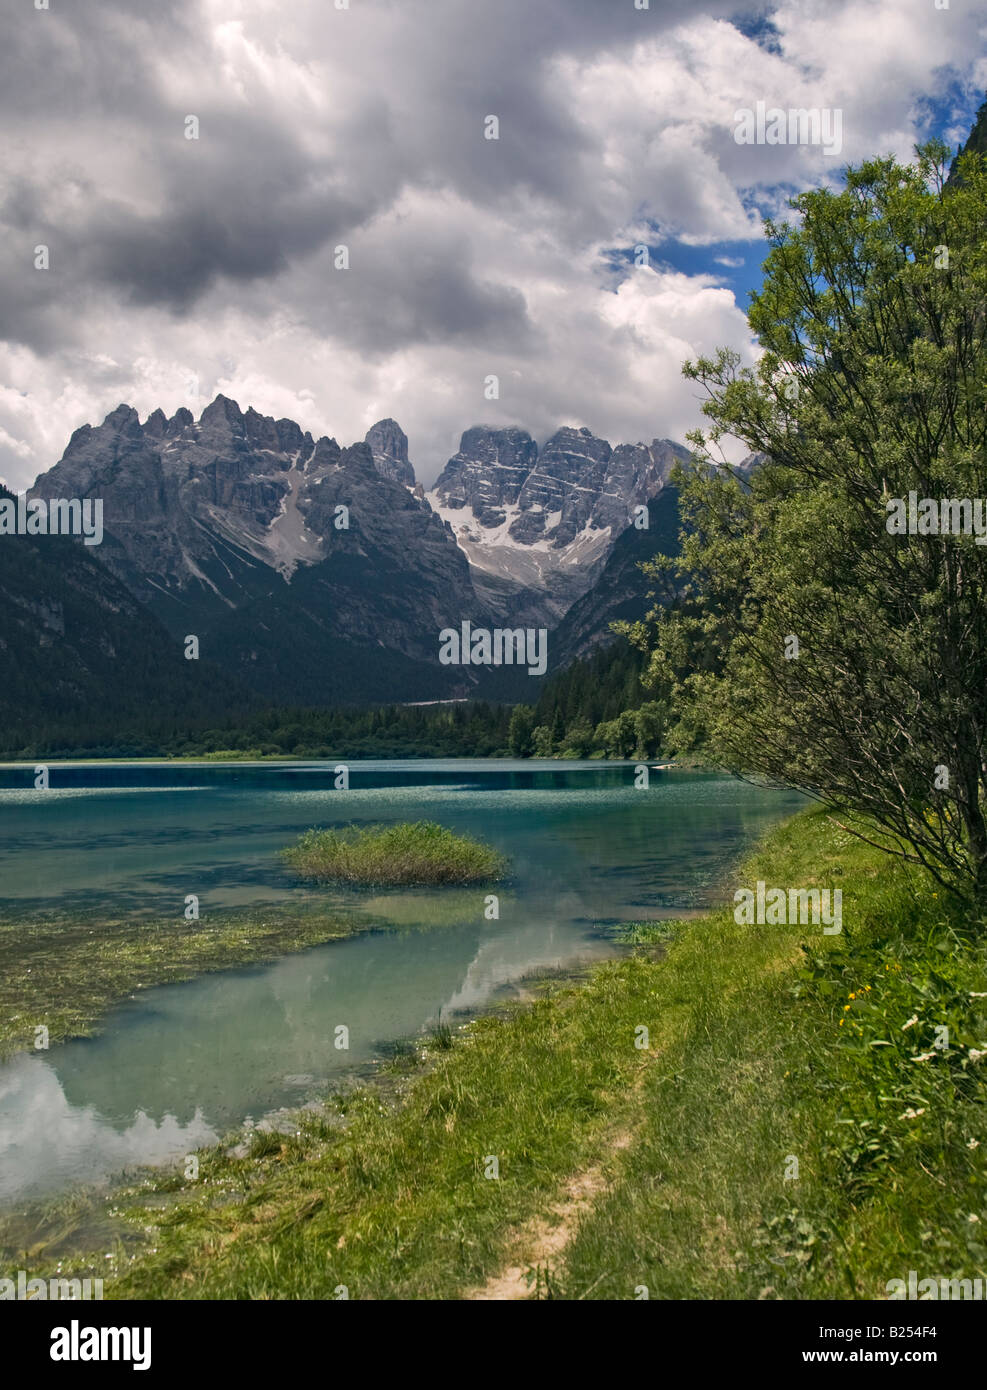 Cristallo-massiv und Landro See in der Nähe von Cortina d ' Ampezzo, Dolomiten, Italien Stockfoto